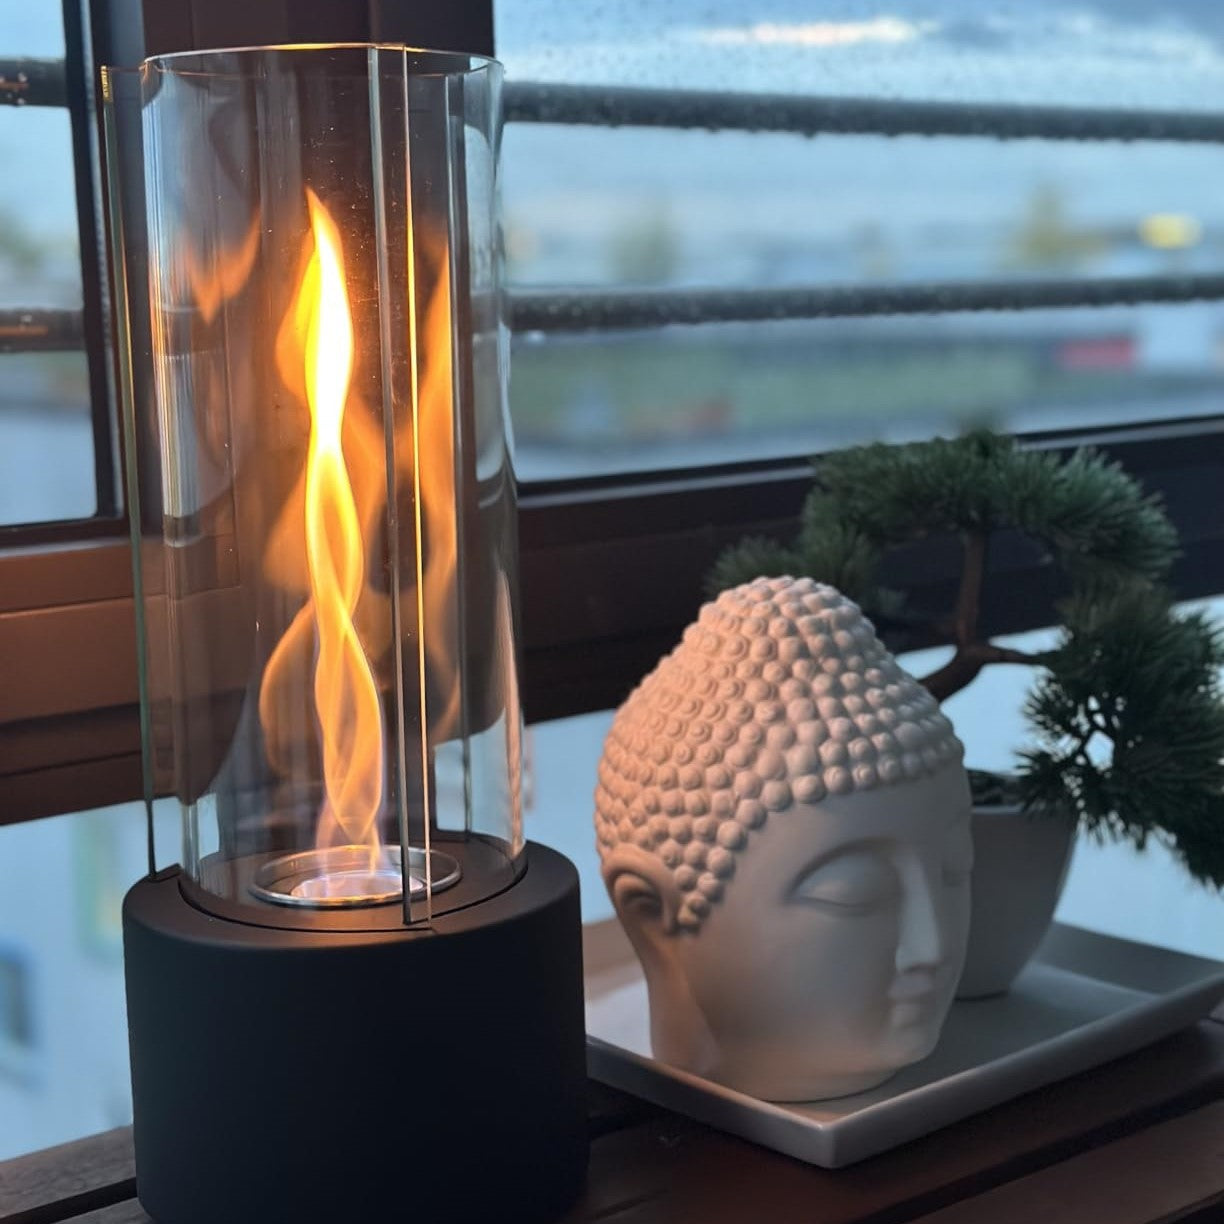 Everlasting Flame™ Oil Lamp